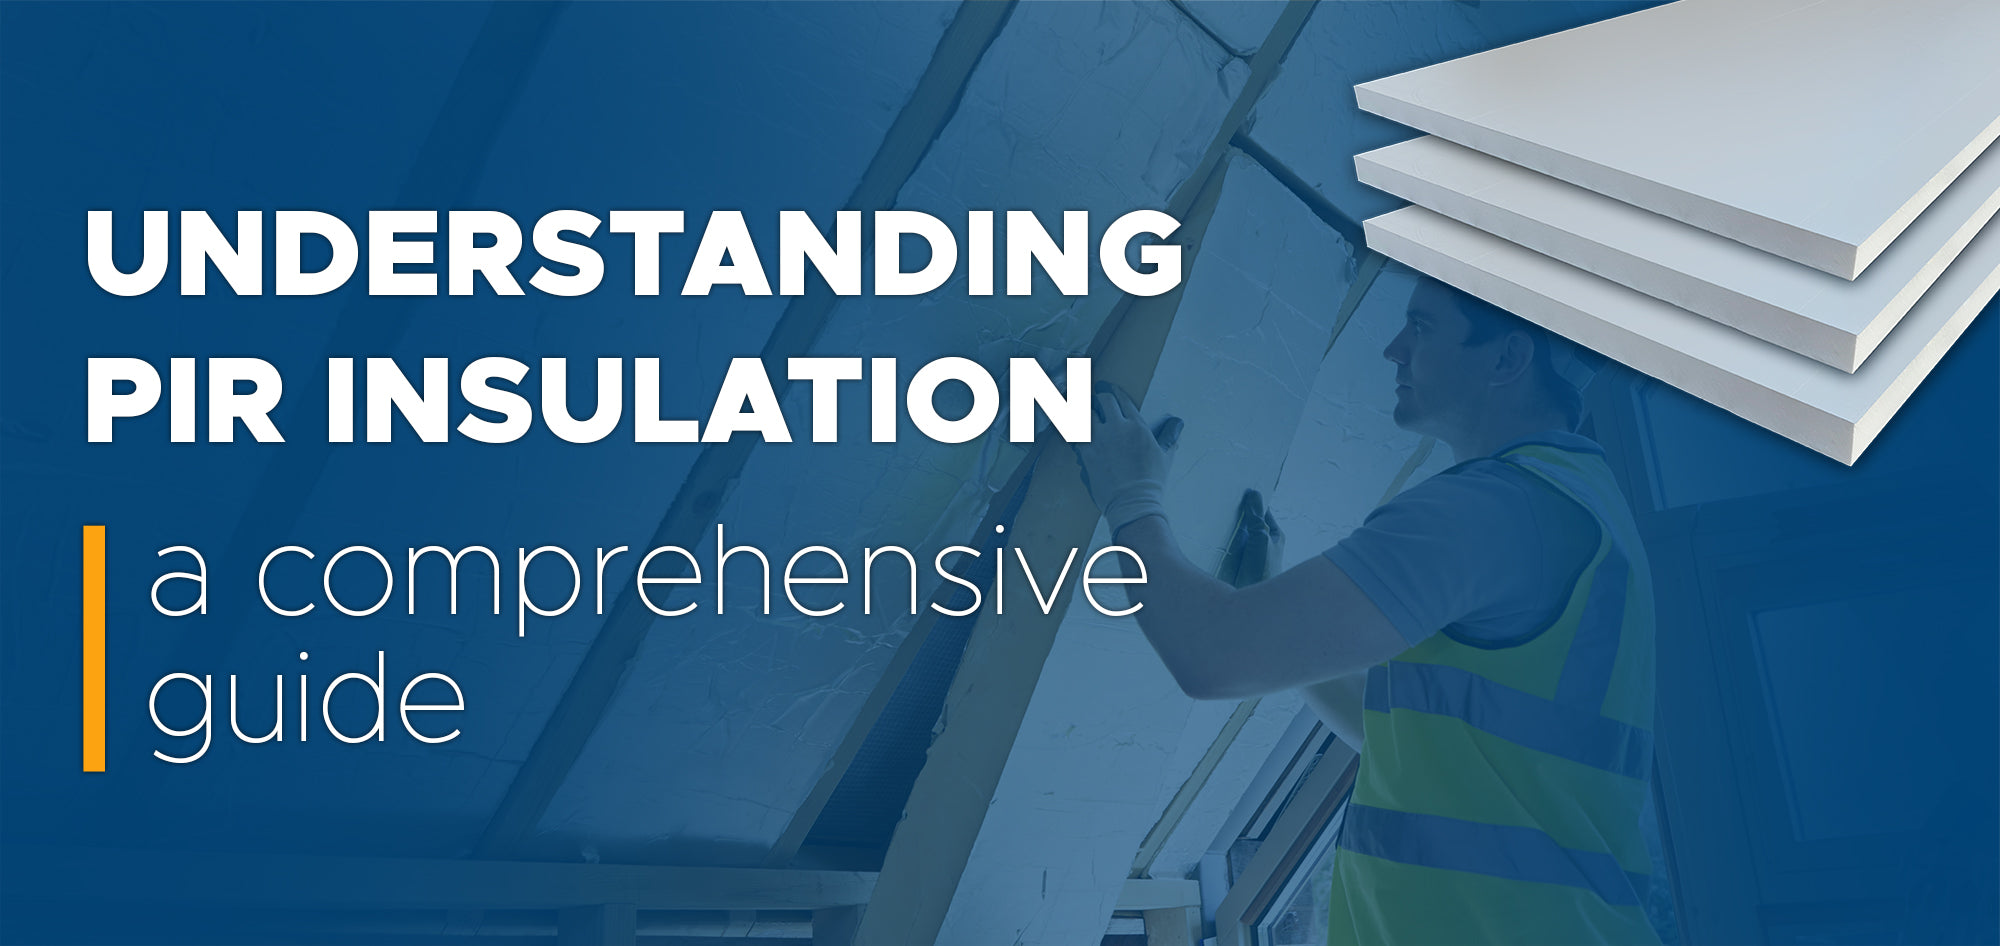 Understanding PIR Insulation: A Comprehensive Guide